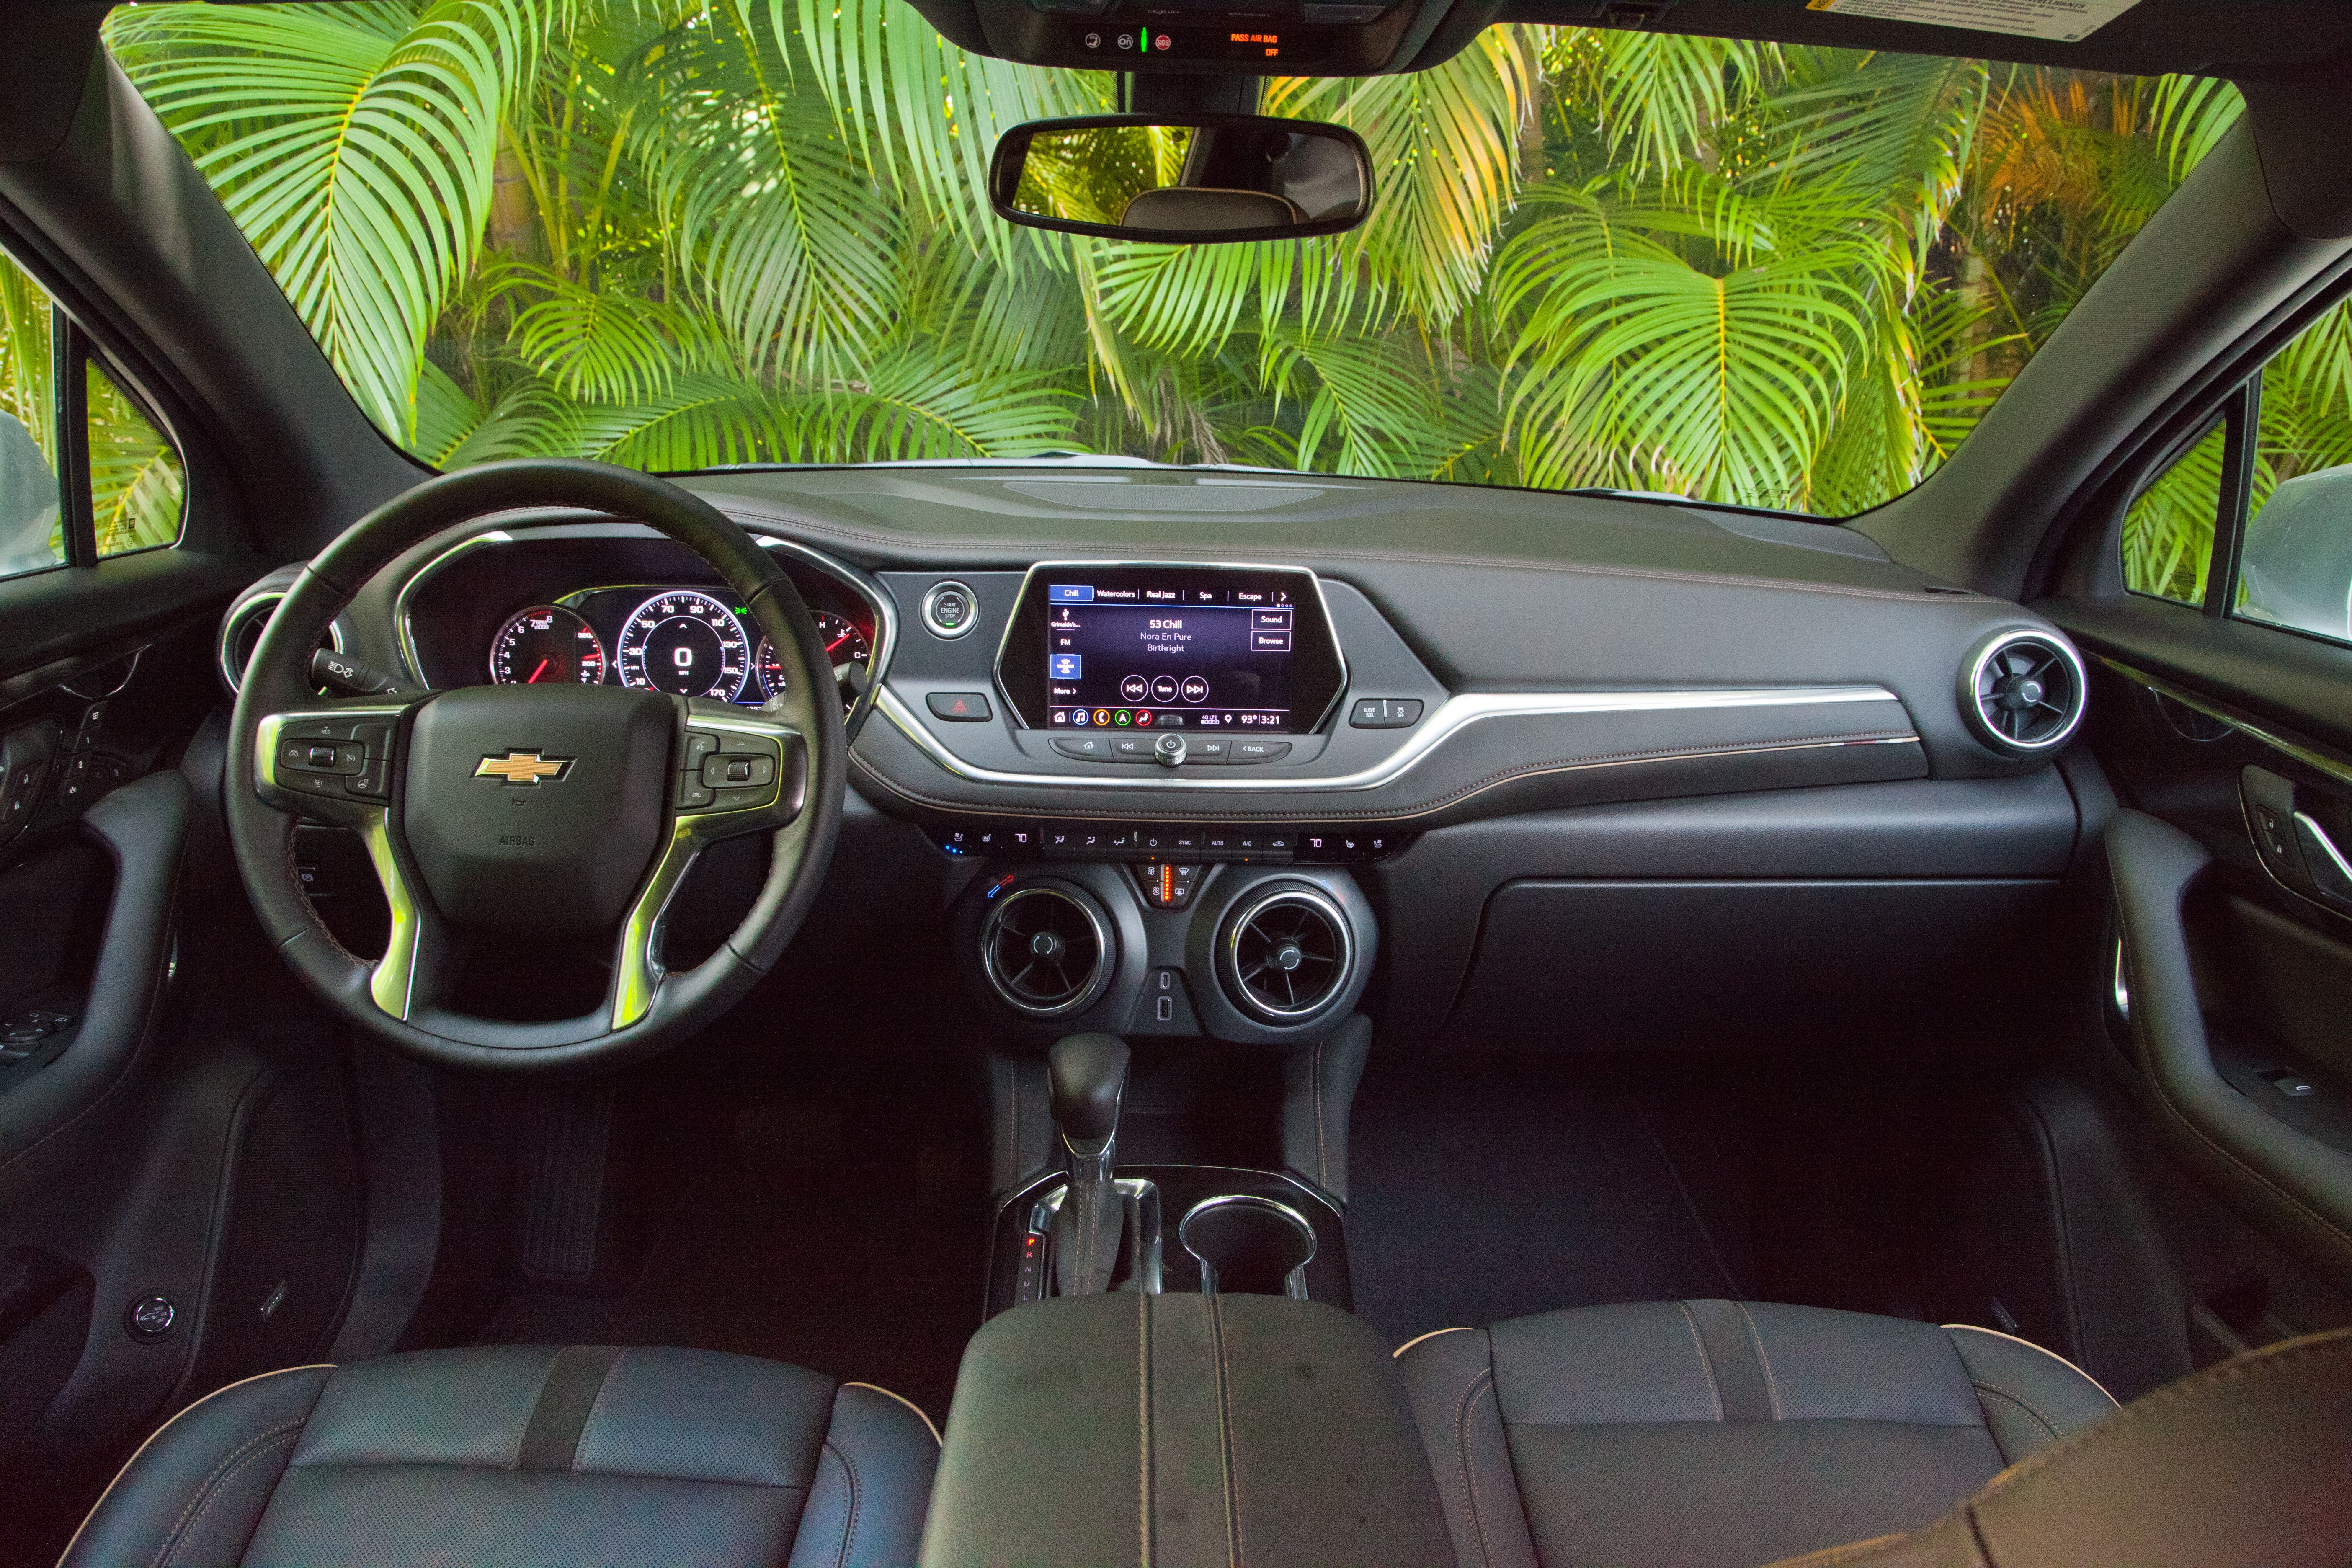 2019 Chevrolet Blazer - Driven